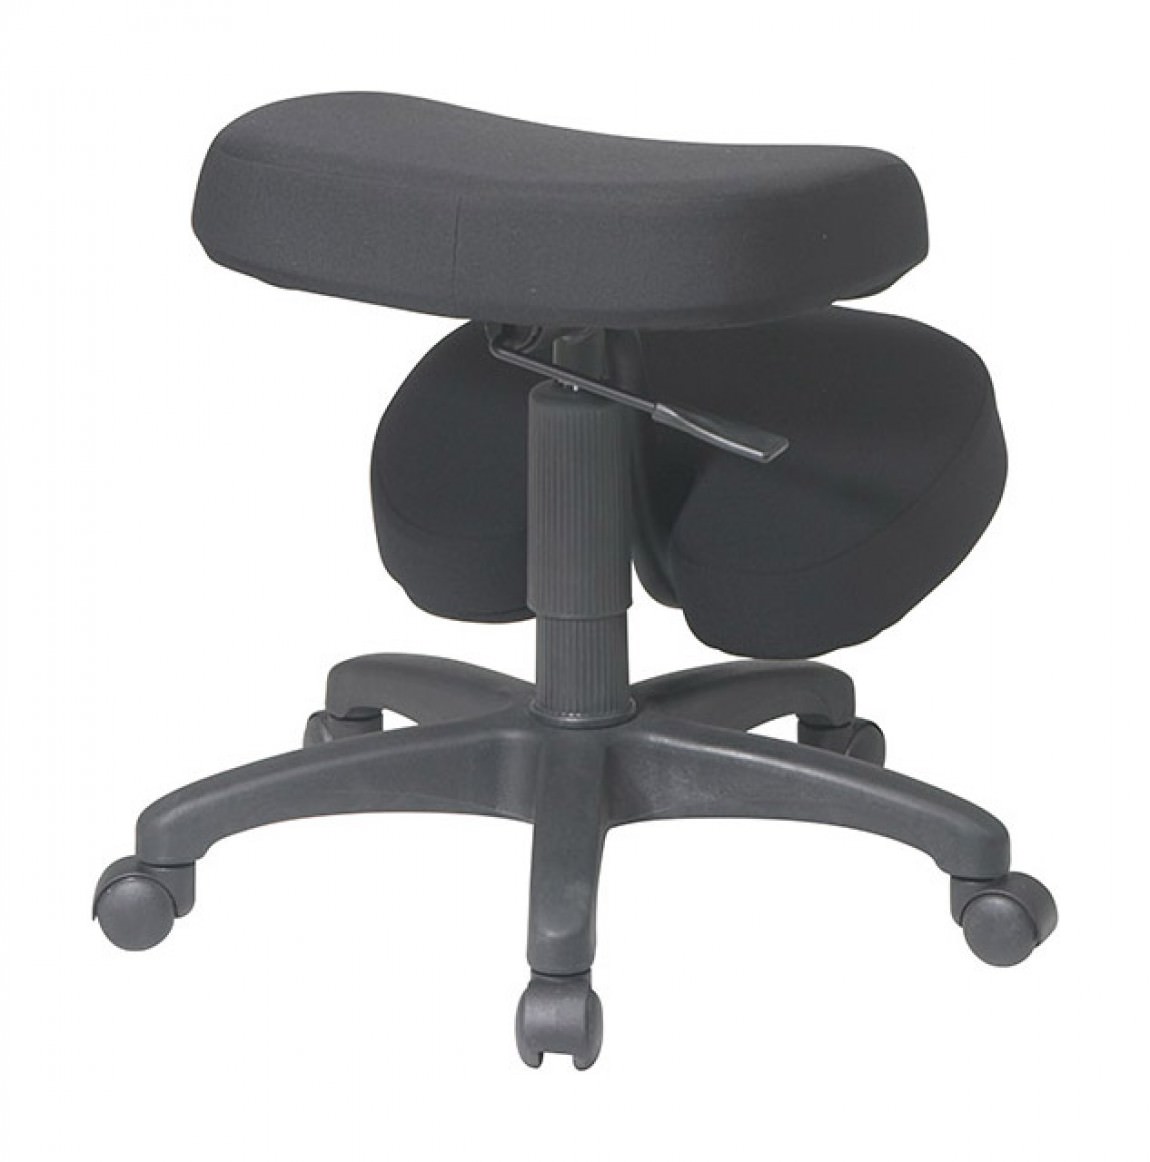 https://madisonliquidators.com/images/p/1150/24919-ergonomic-kneeling-chair-3.jpg